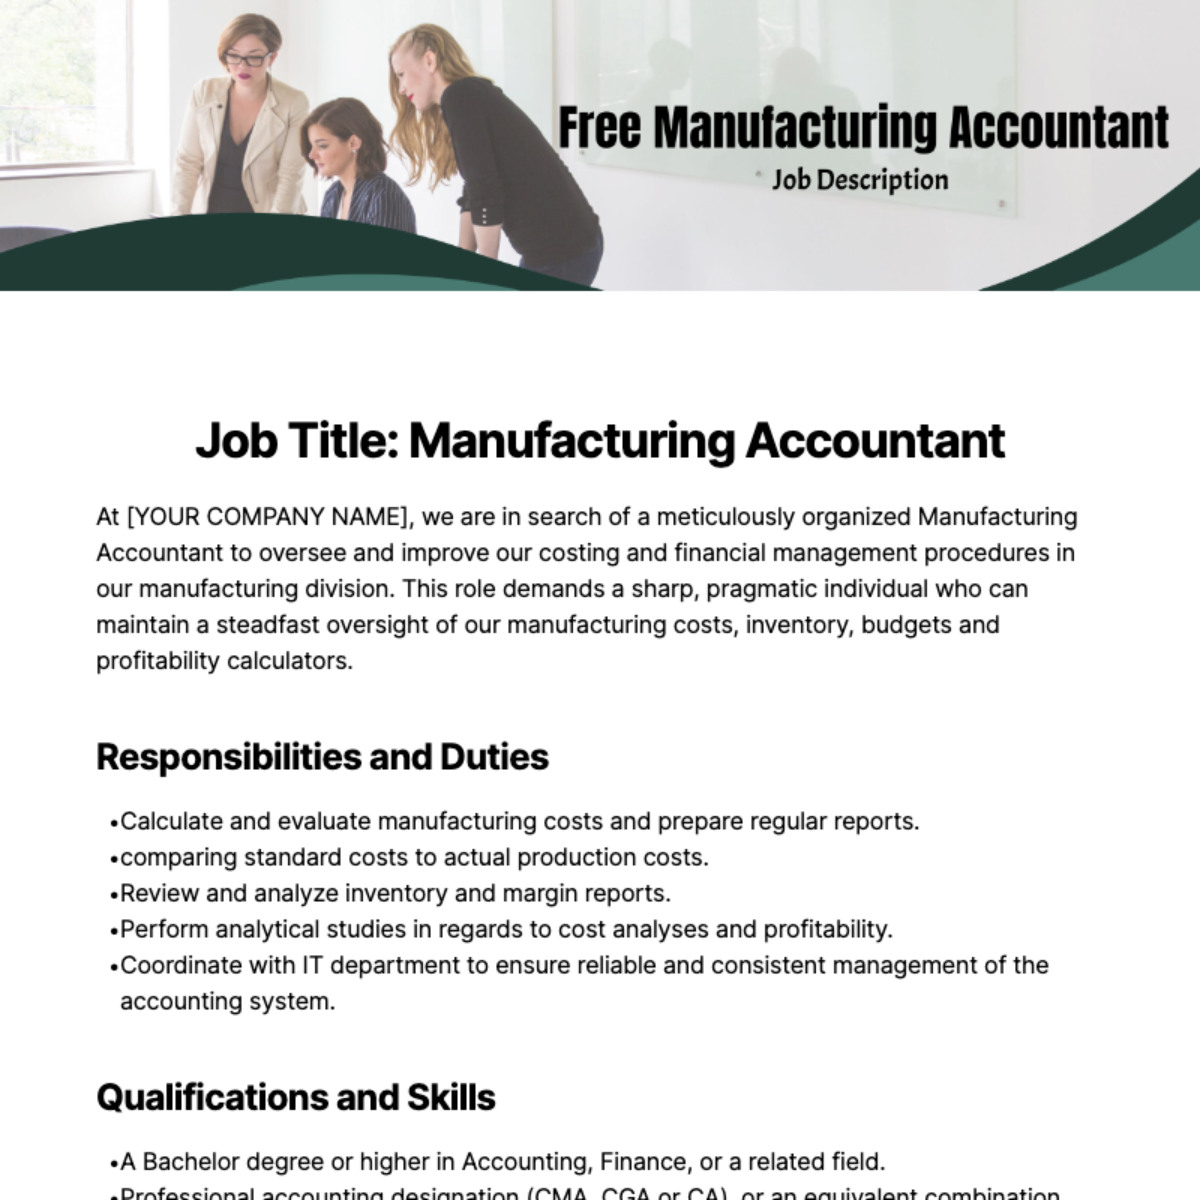 Free Manufacturing Accountant Job Description Template